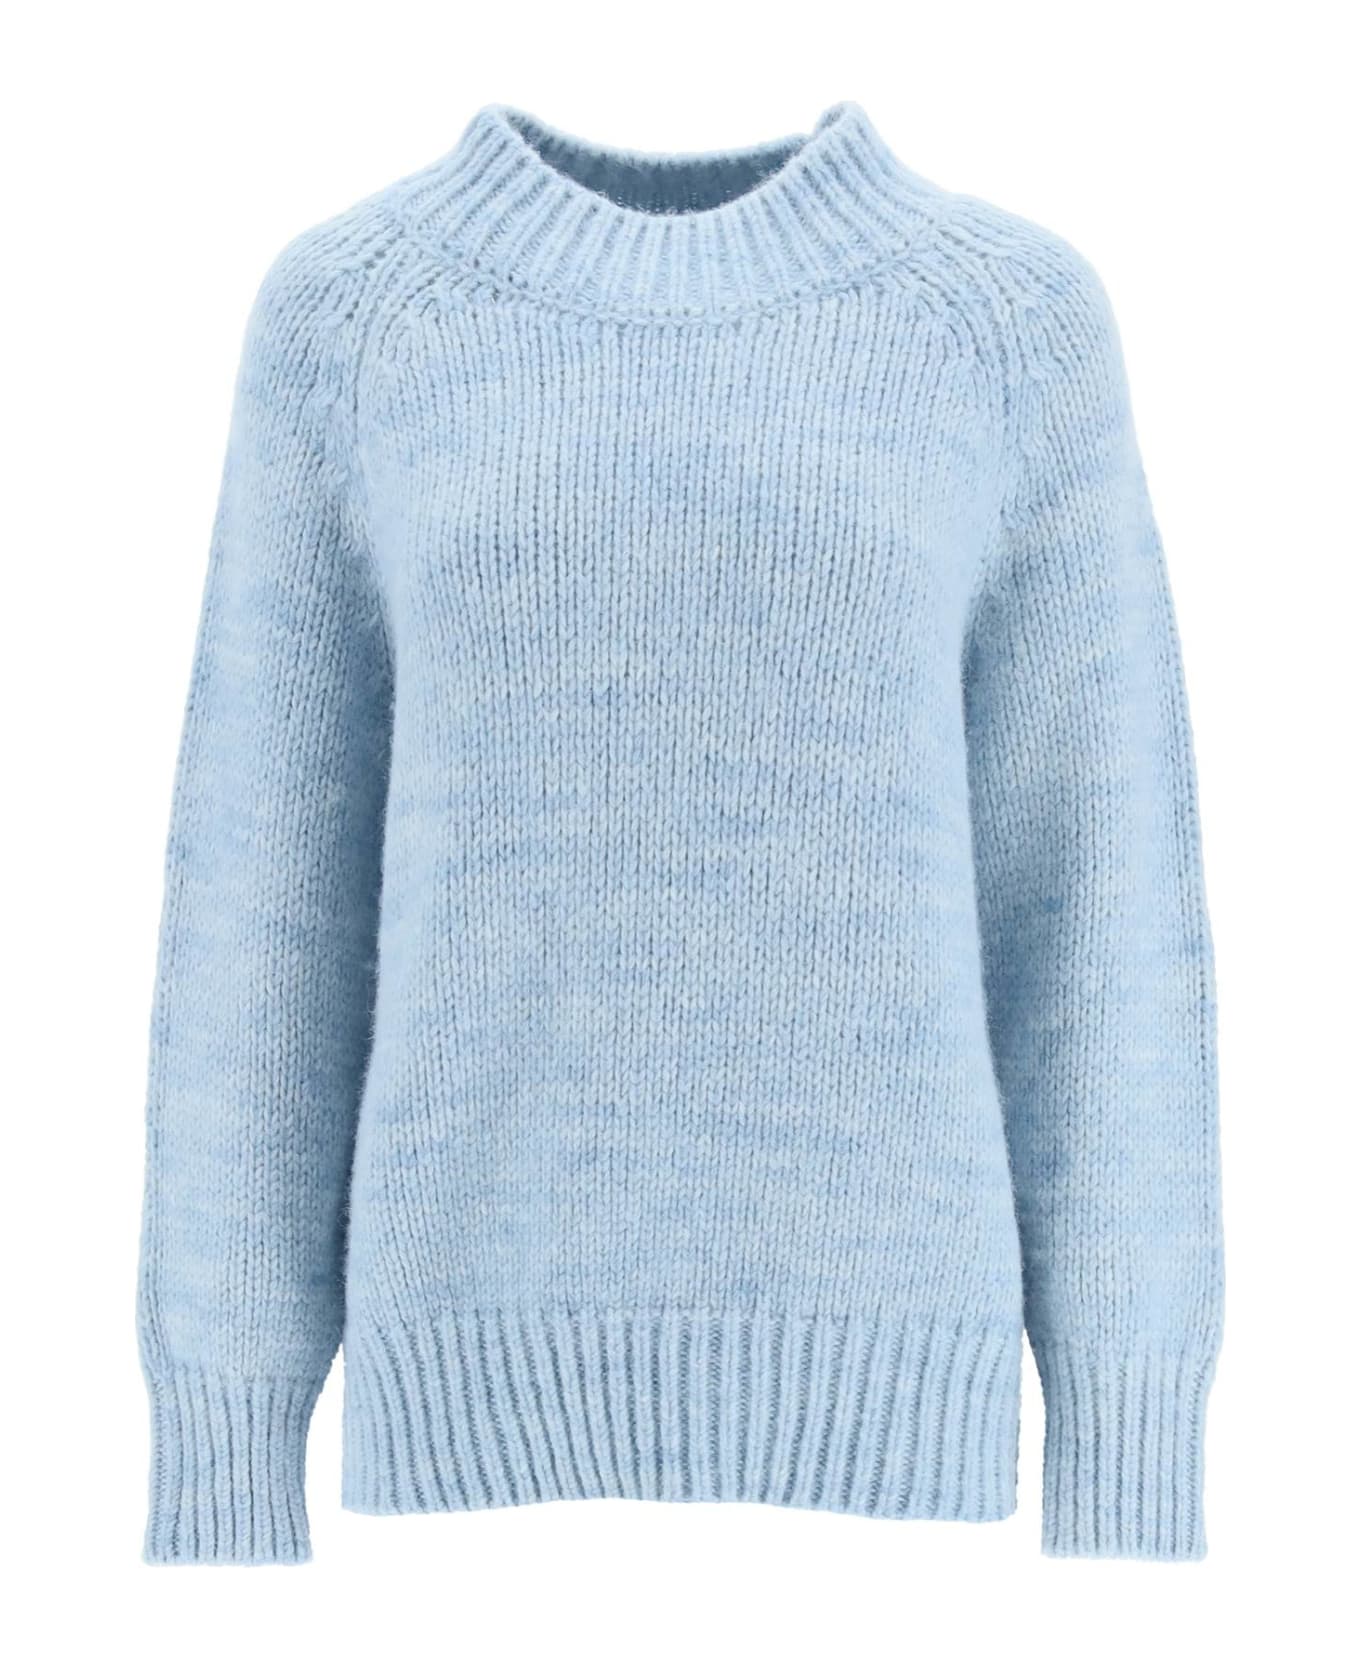 Maison Margiela Ribbed Sweater - PALE BLUE (Light blue) ニットウェア